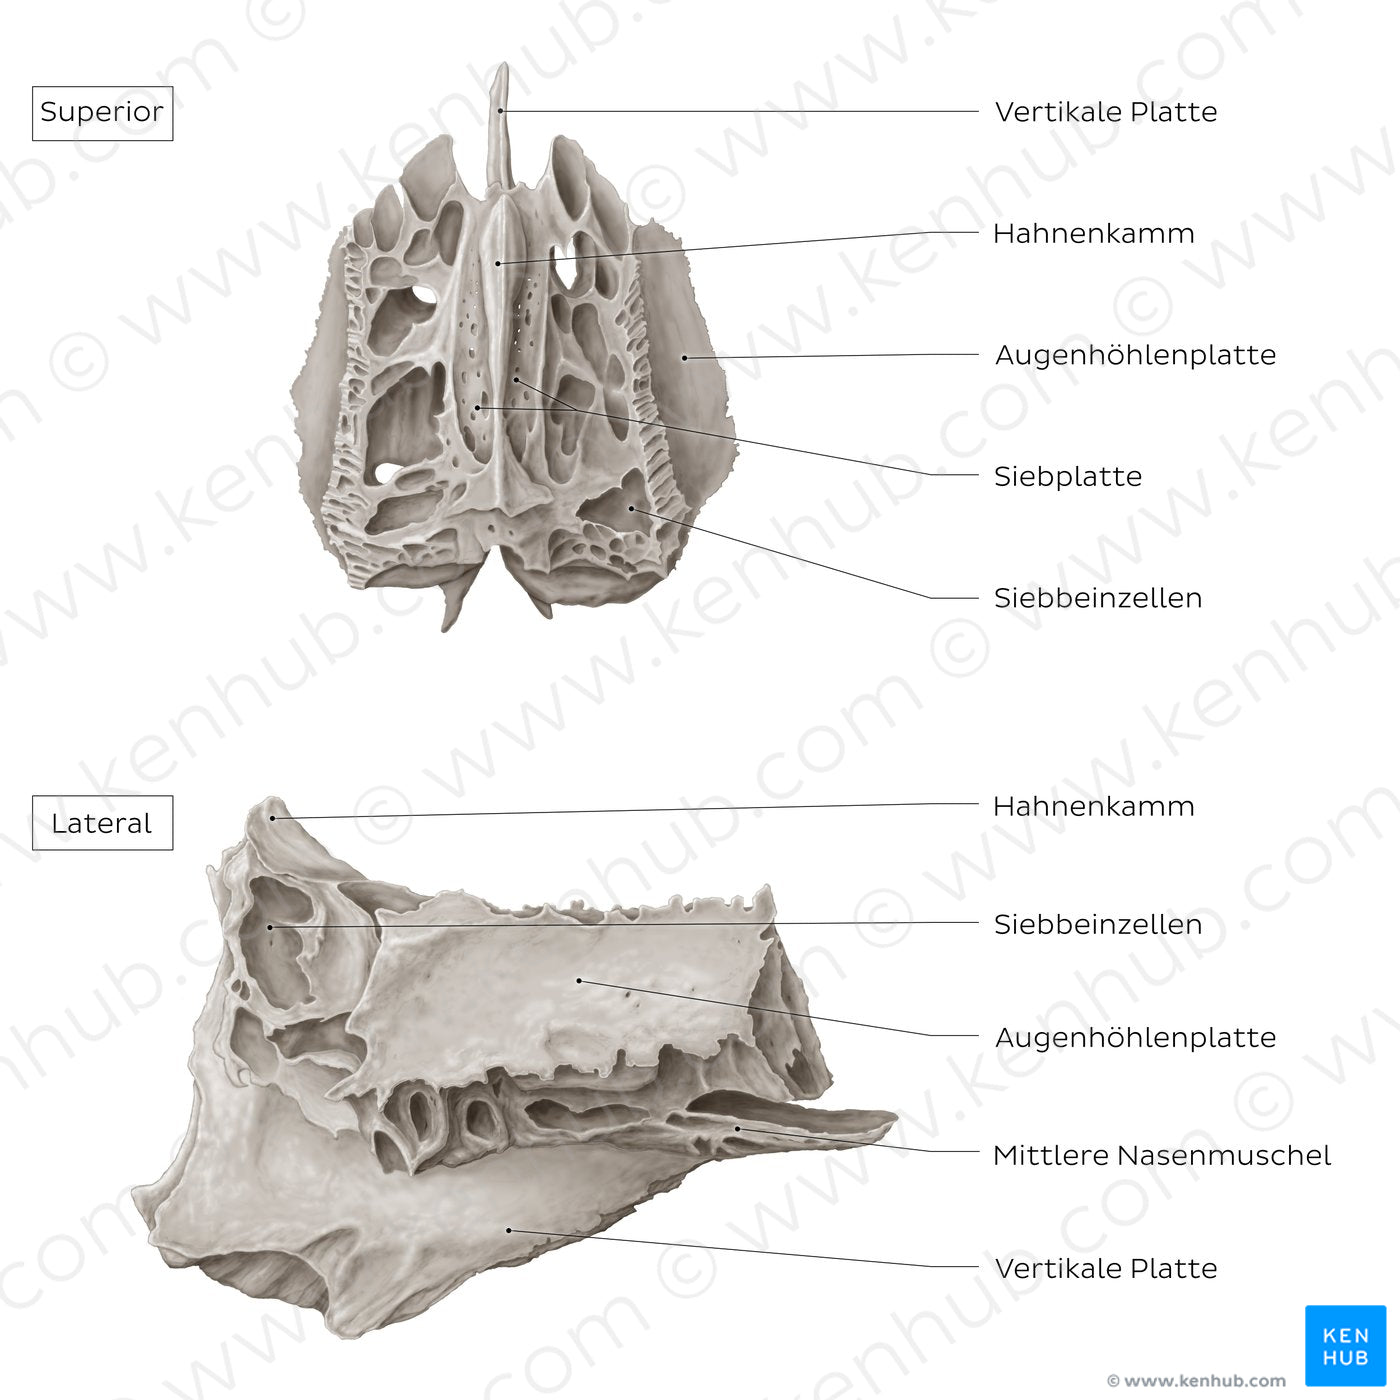 Ethmoid bone (superior and lateral views) (German)